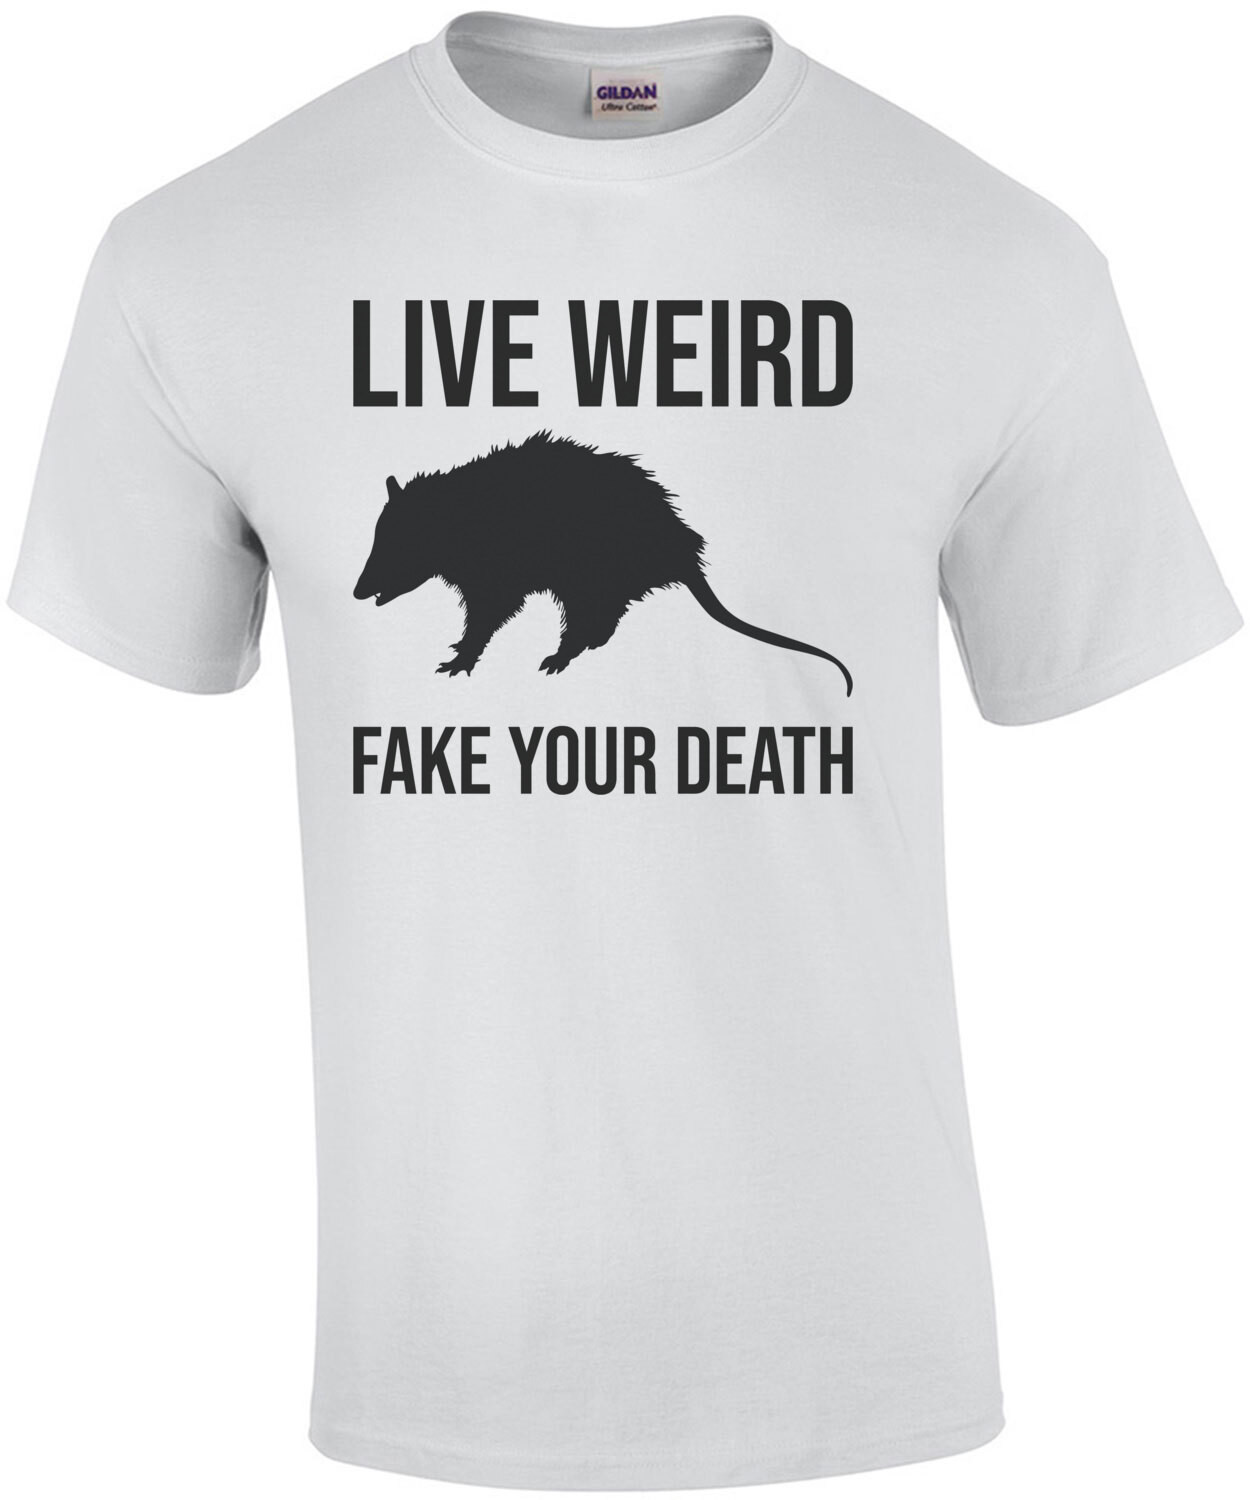 Live Weird - Fake Your Death - funny opossum t-shirt